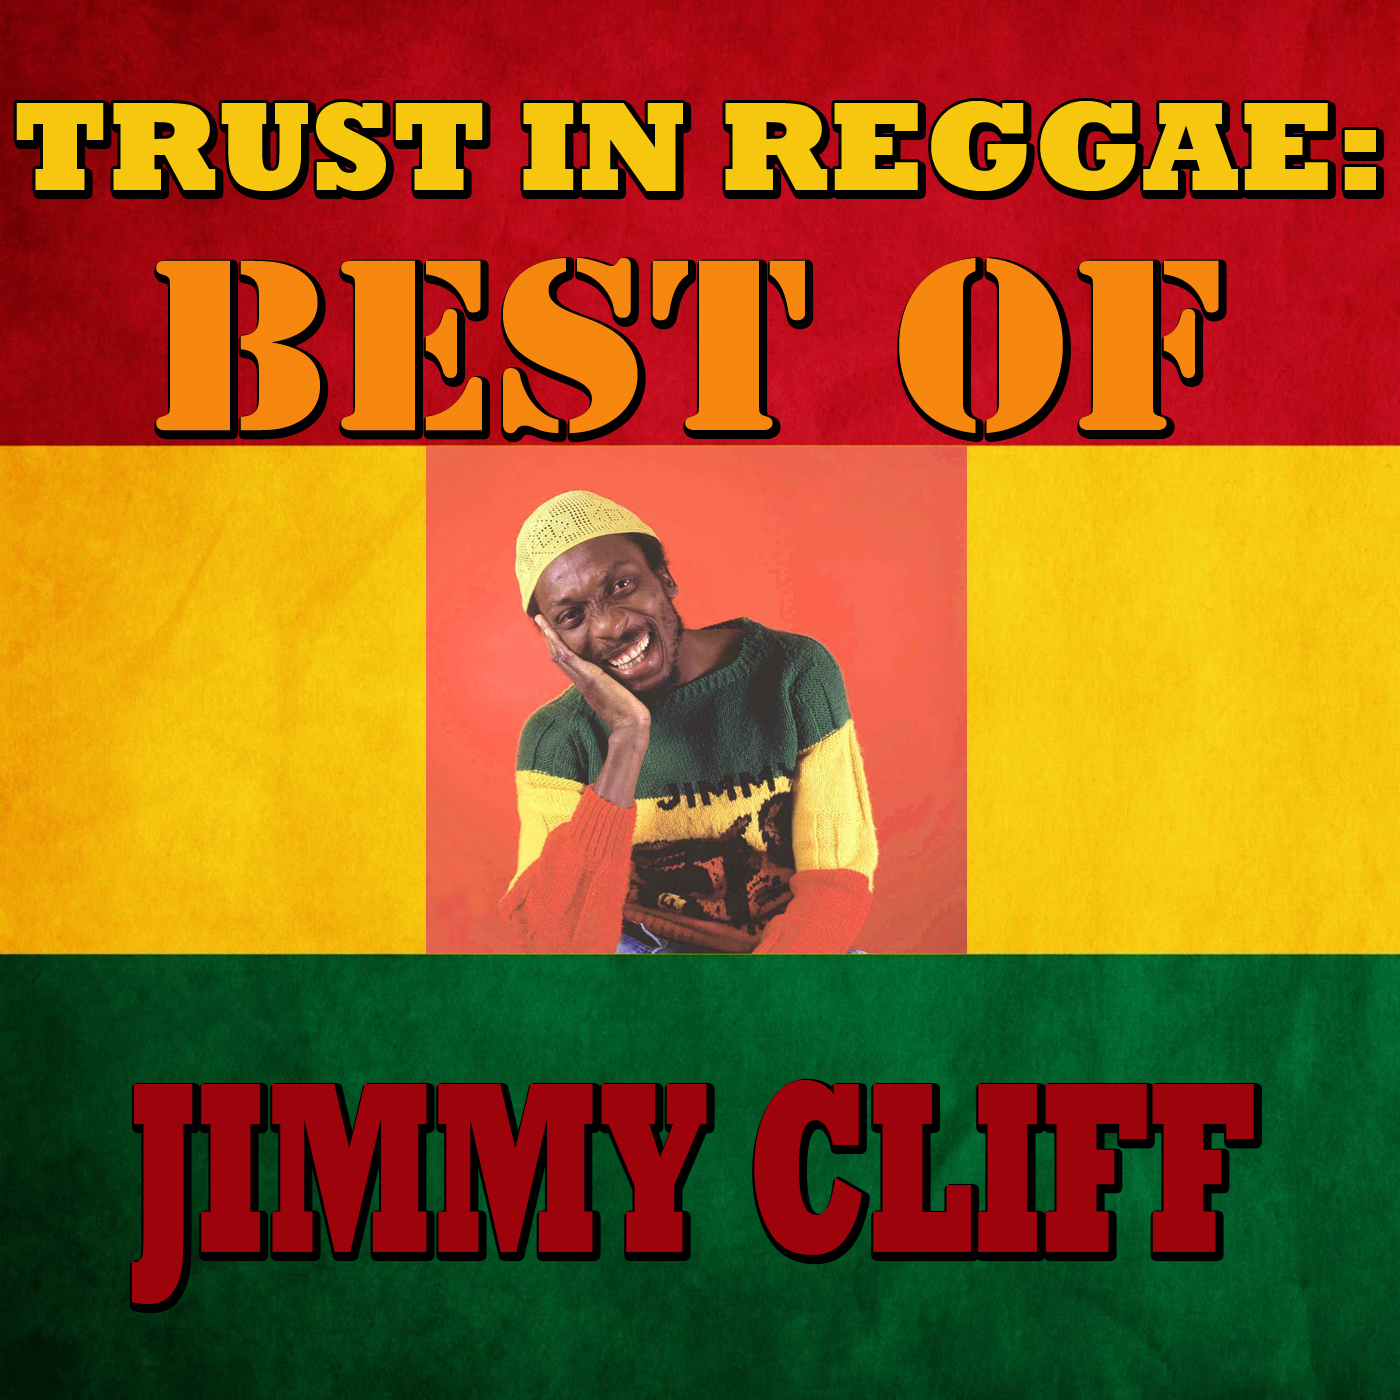 Trust In Reggae: Best Of Jimmy Cliff